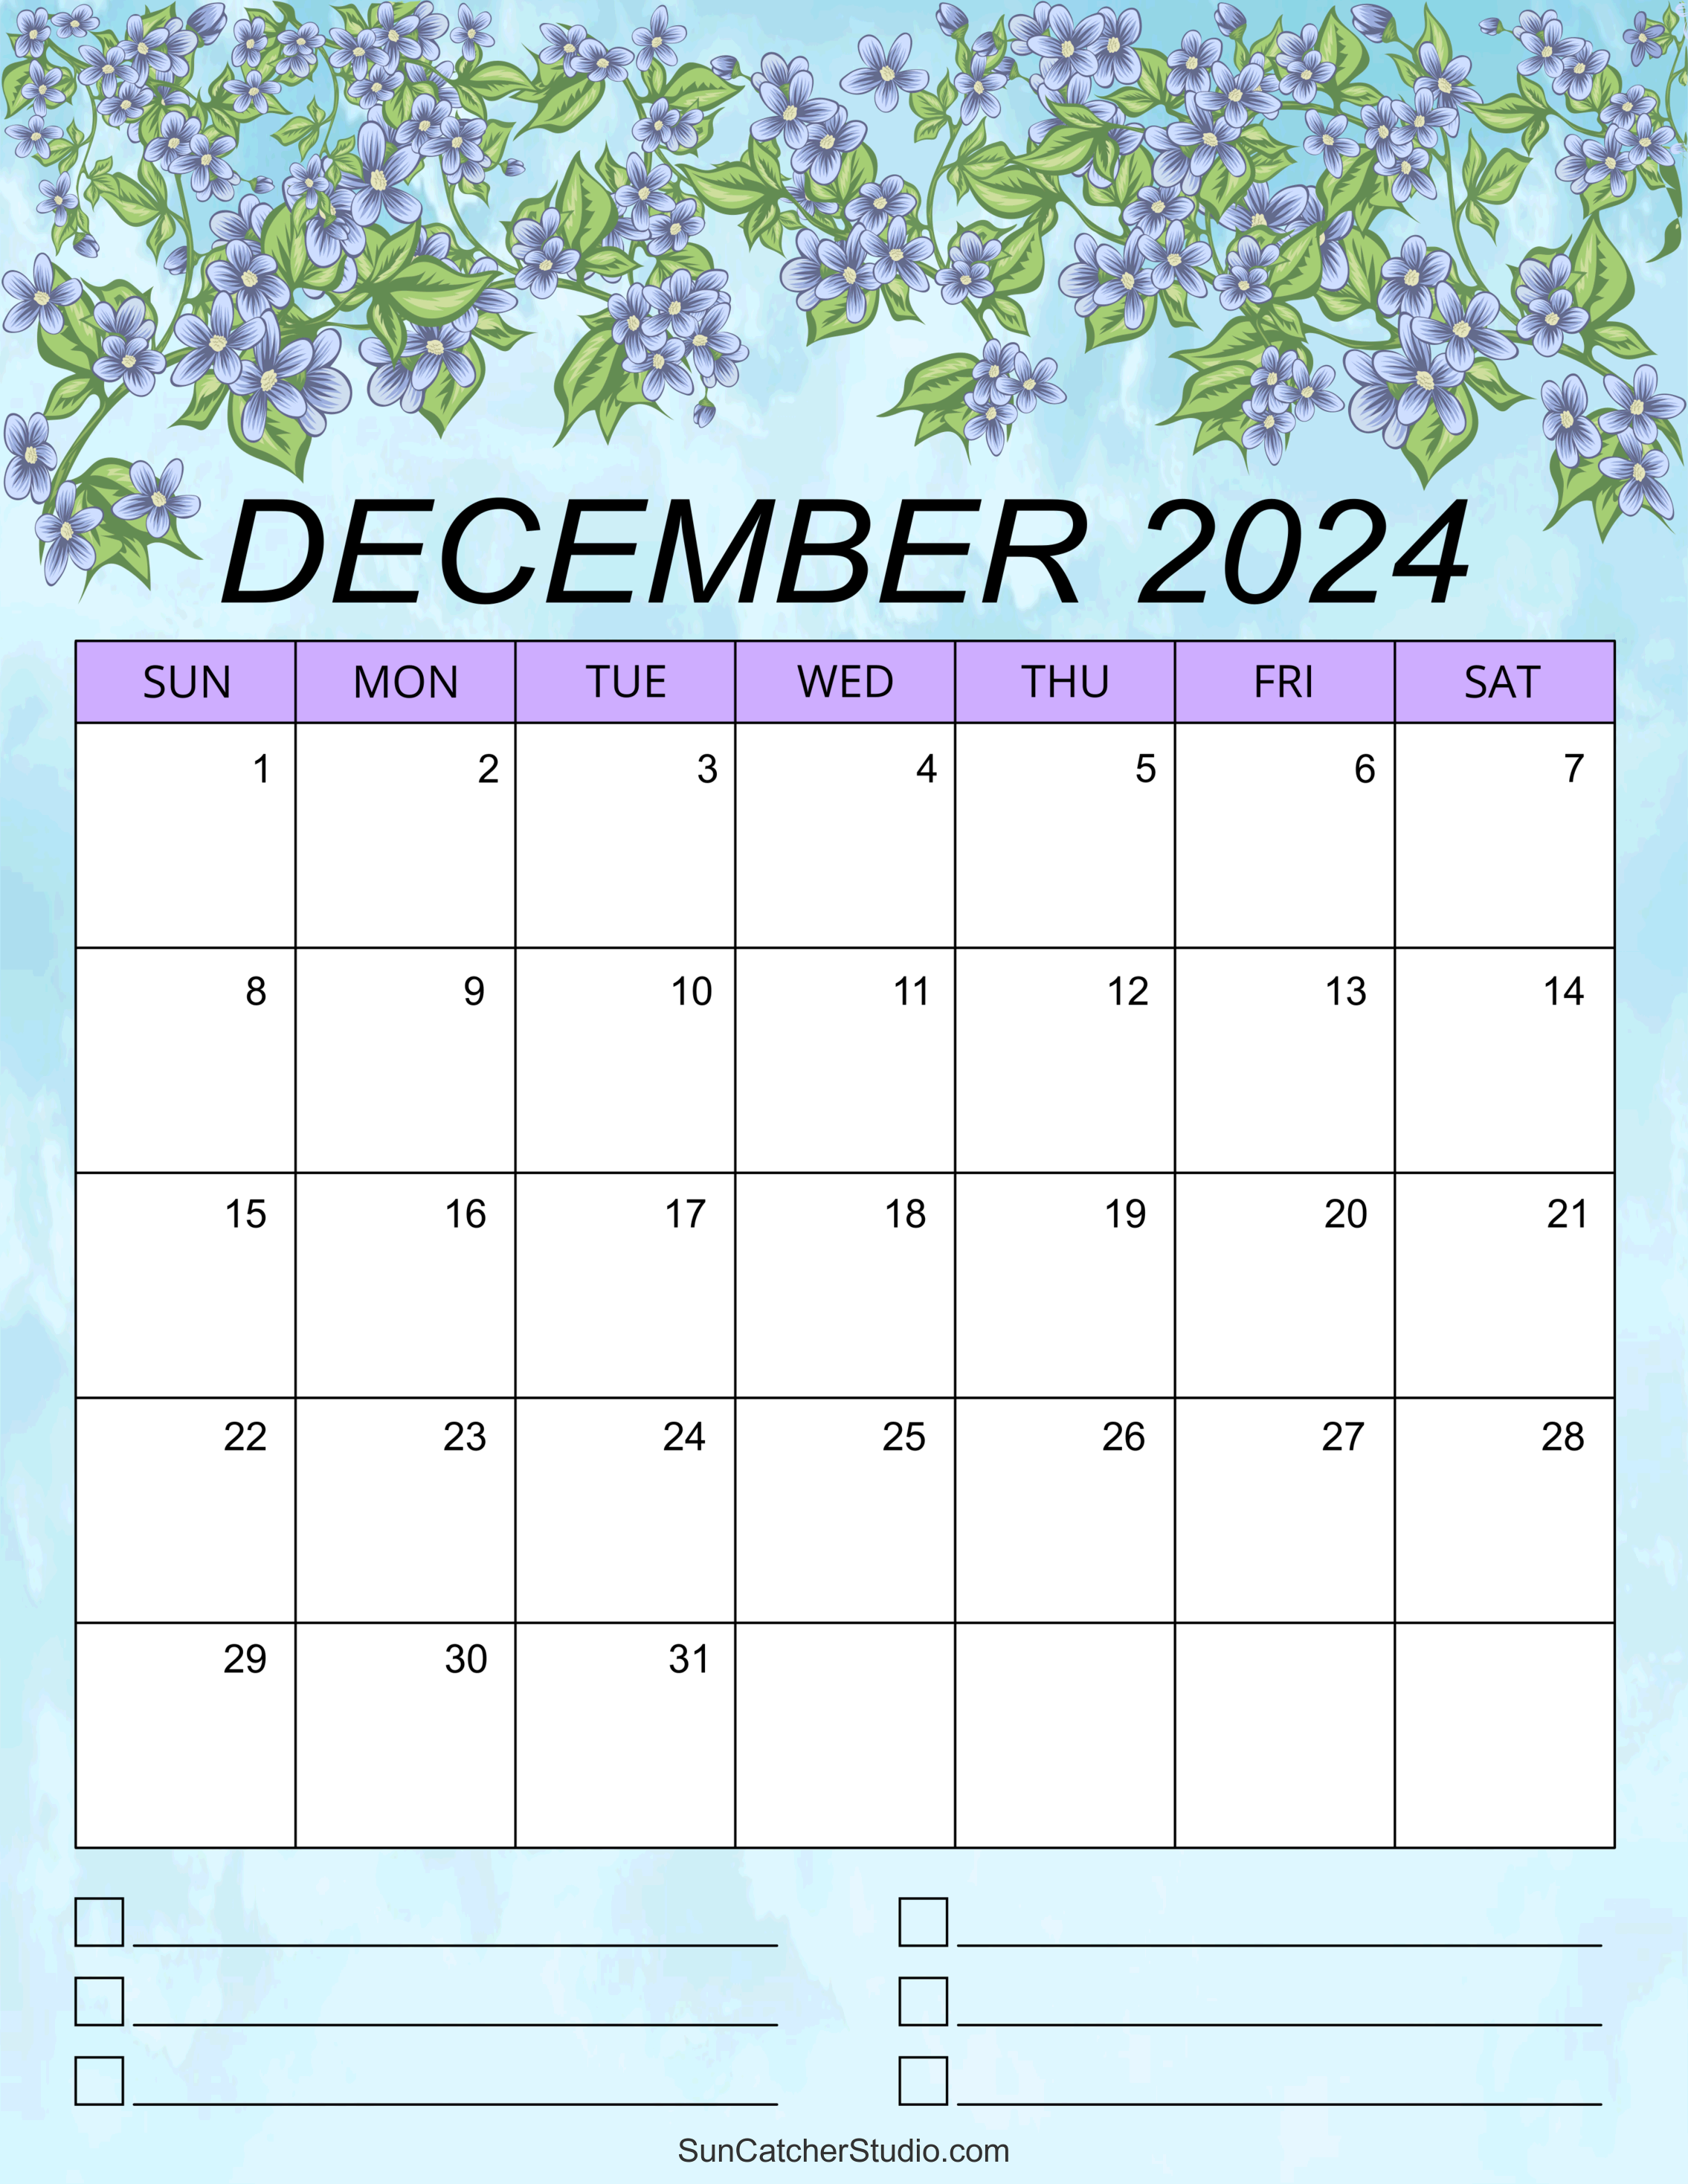 December 2024 Calendar (Free Printable) DIY Projects, Patterns